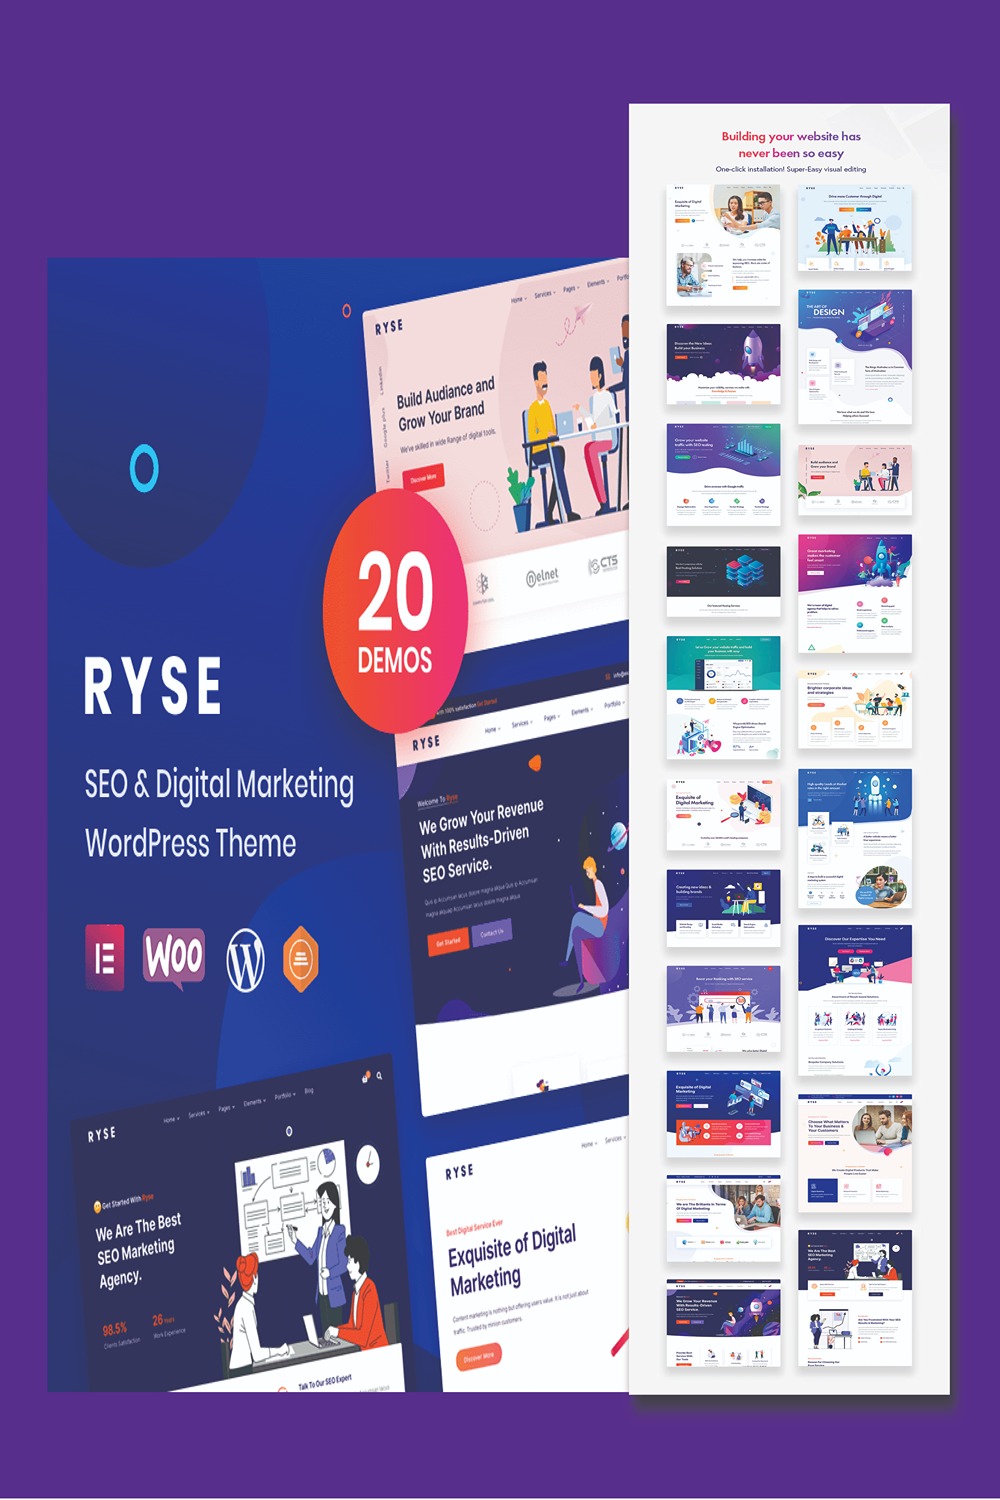 Ryse - SEO & Digital Marketing Theme pinterest preview image.